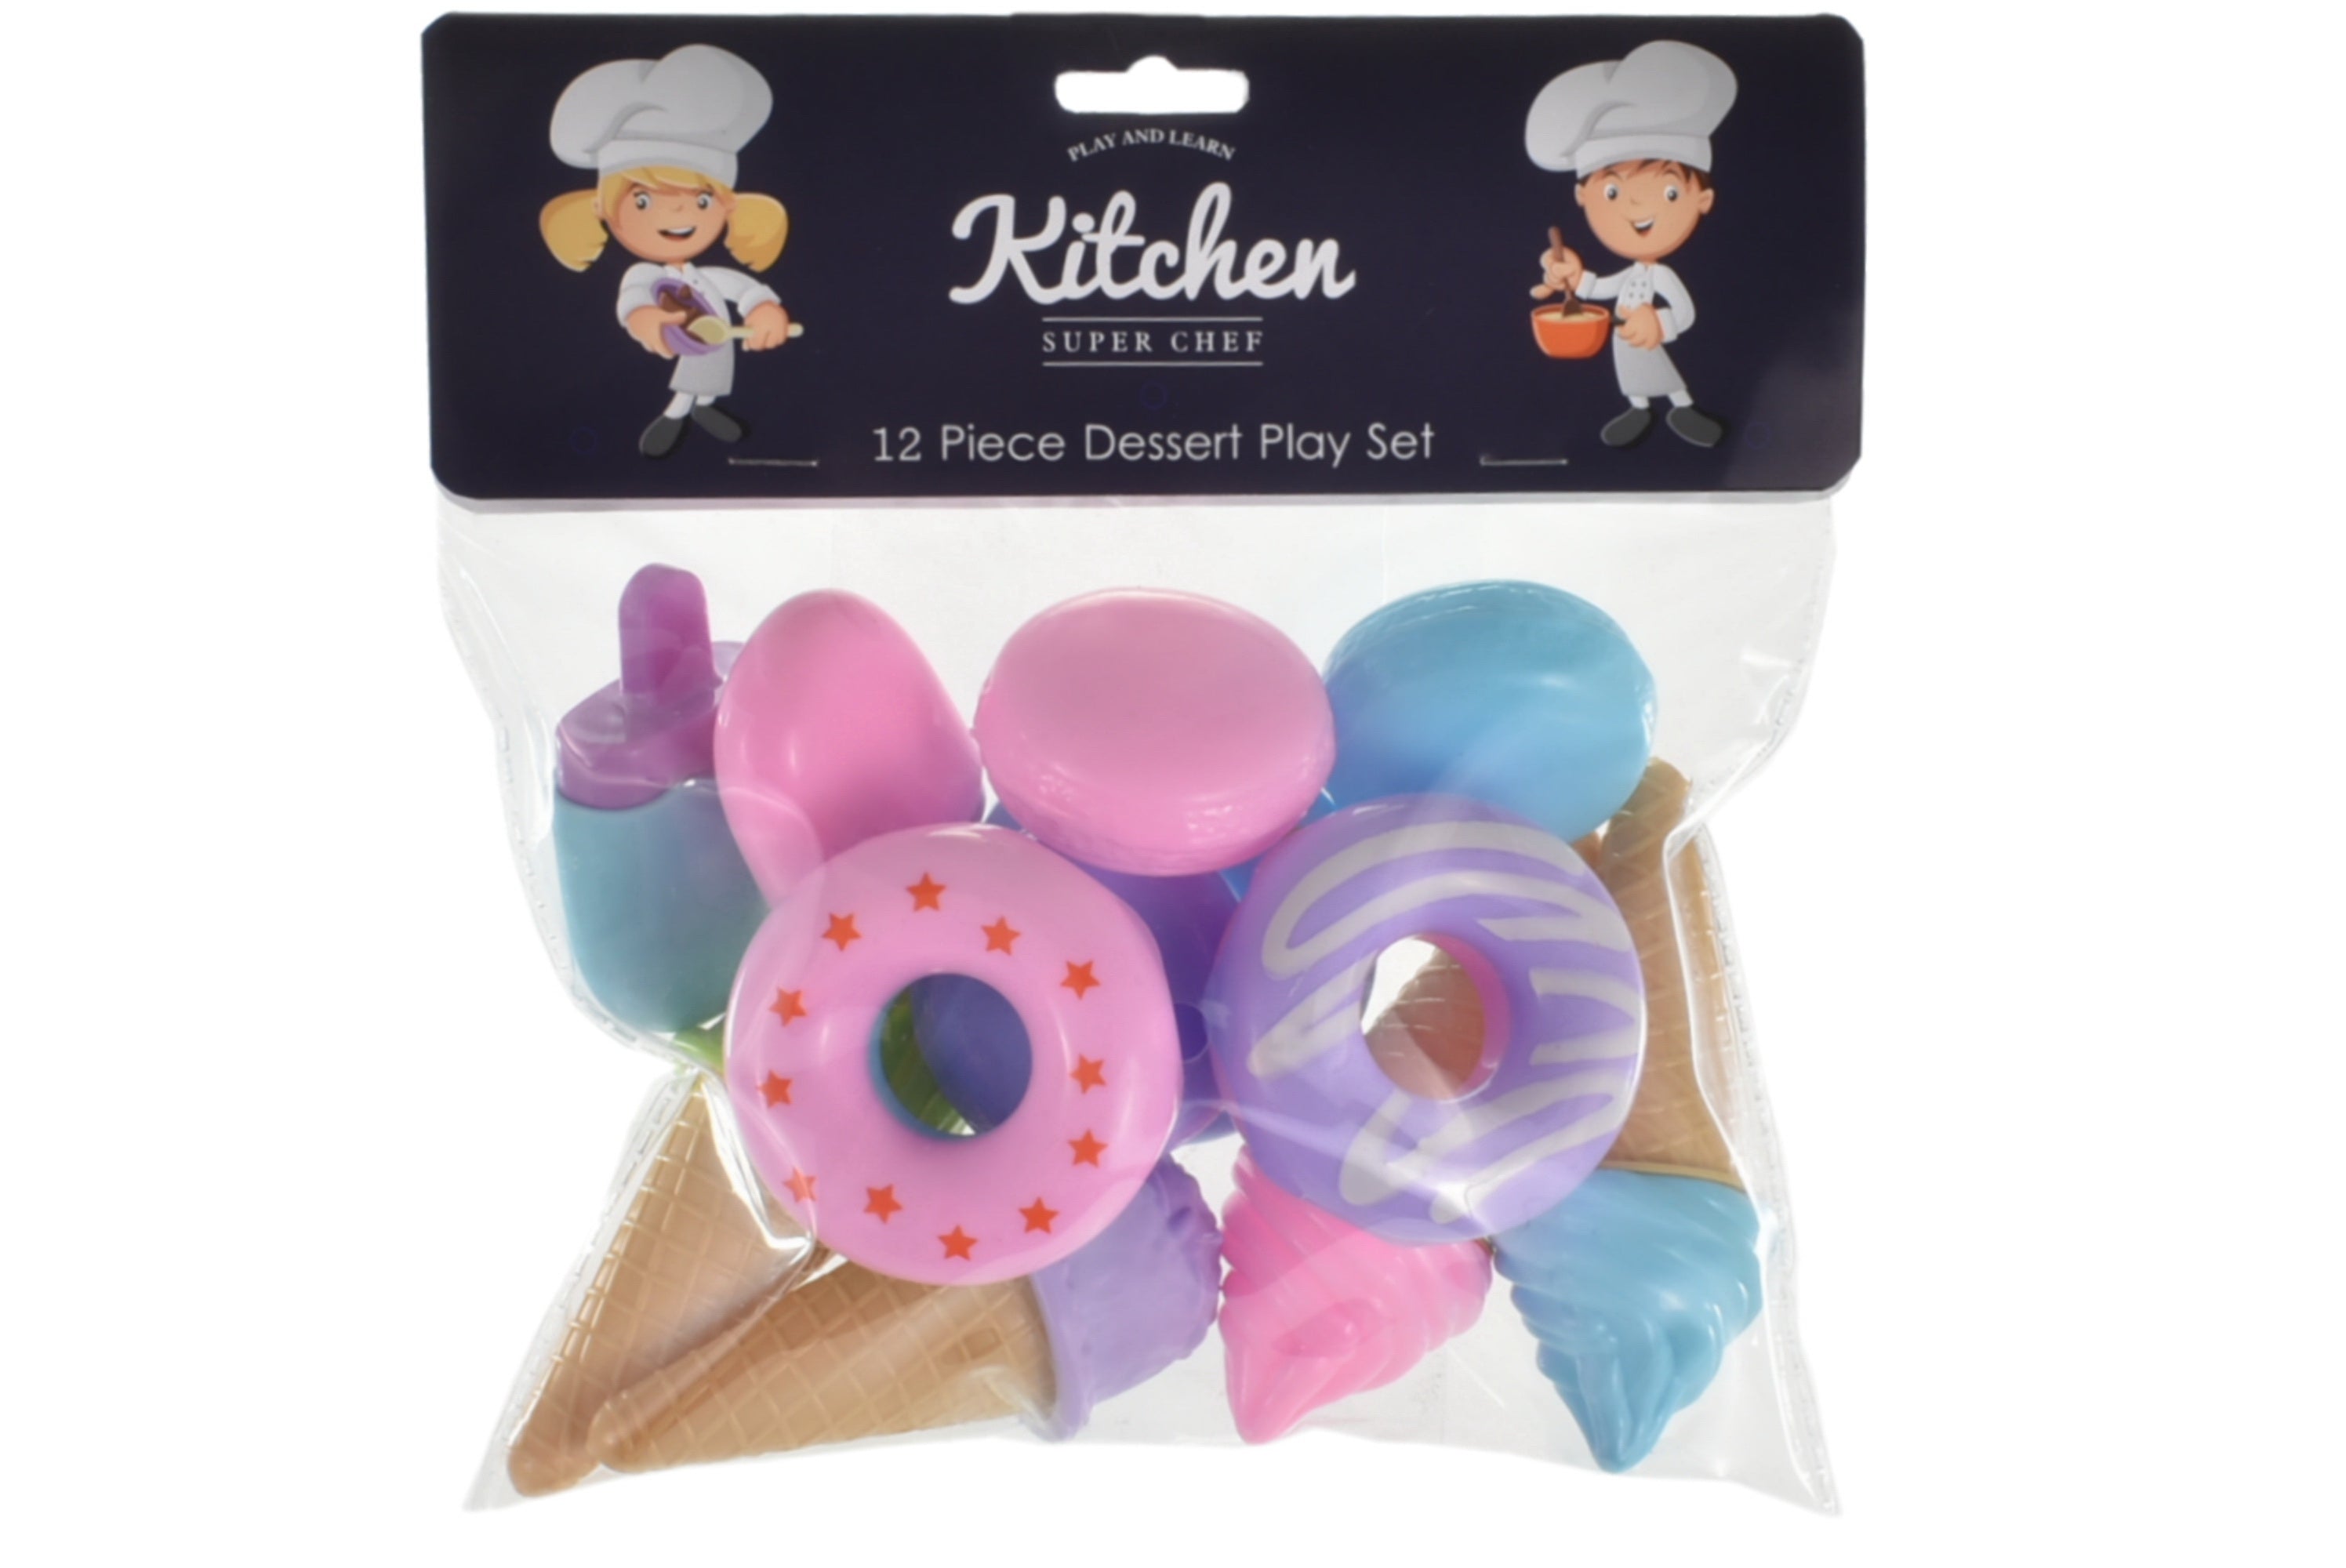 KandyToys Play & Learn Kitchen Super Chef 12 Piece Dessert Play Set